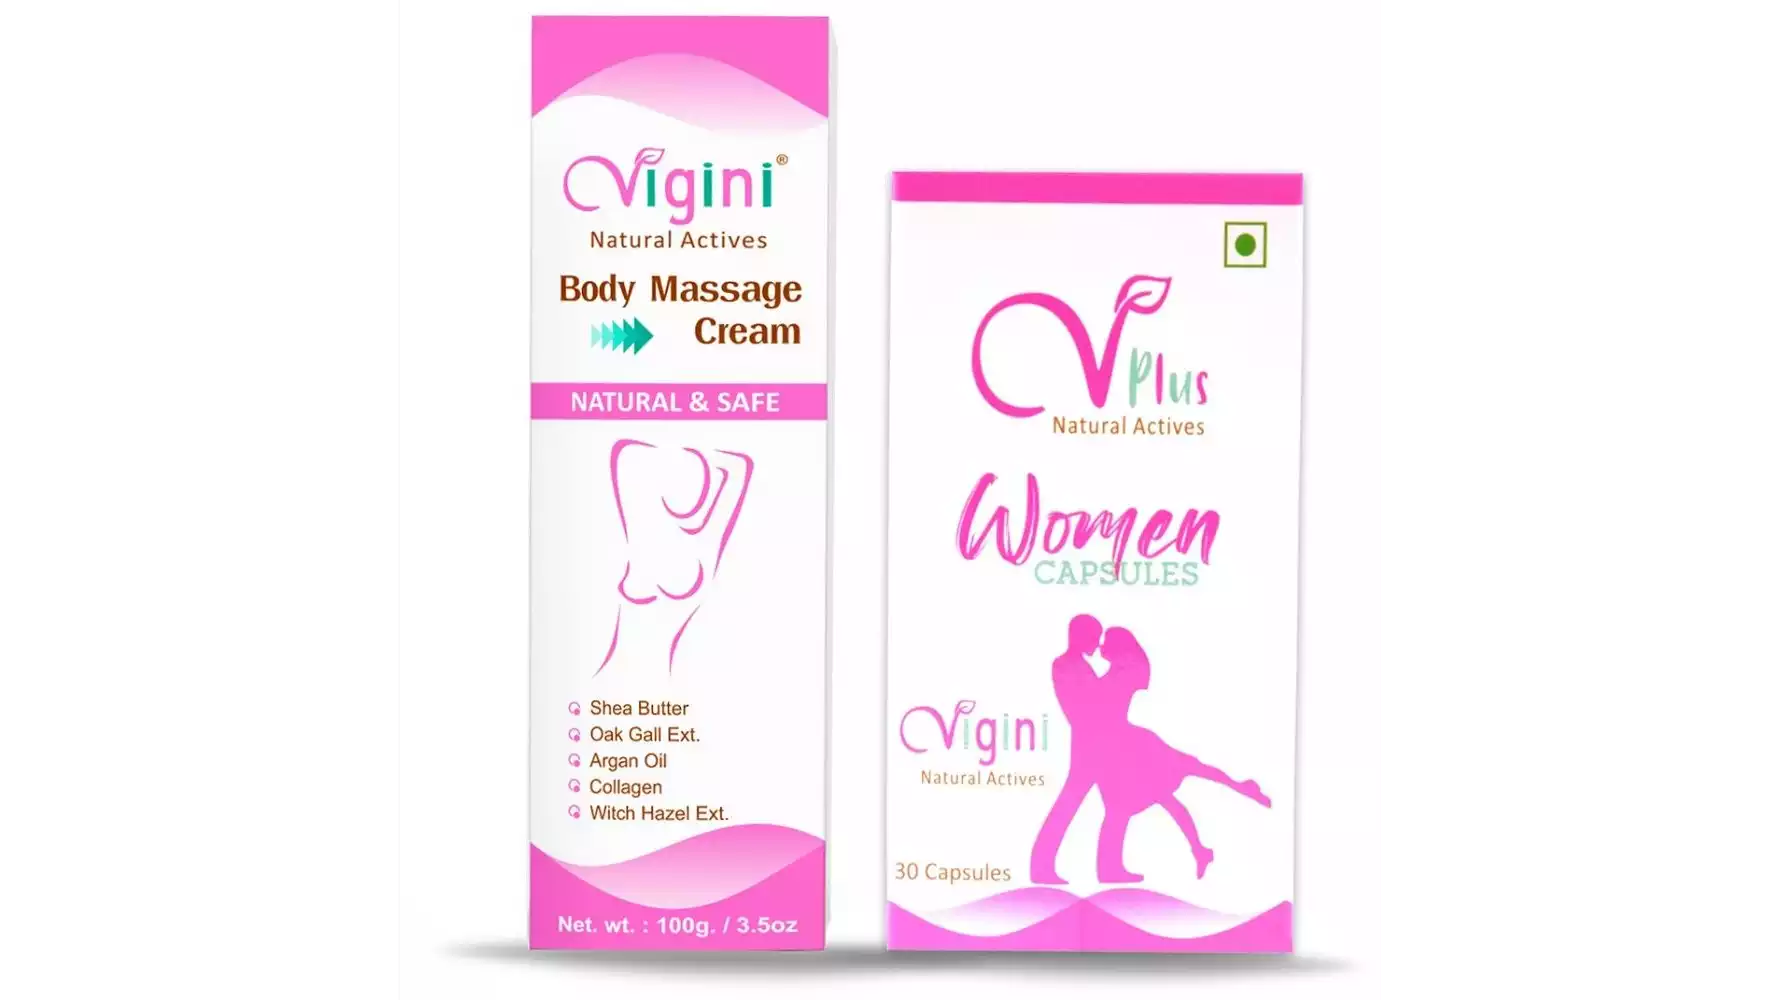 Vigini Body Massage Cream & Women Capsules Combo (1Pack)